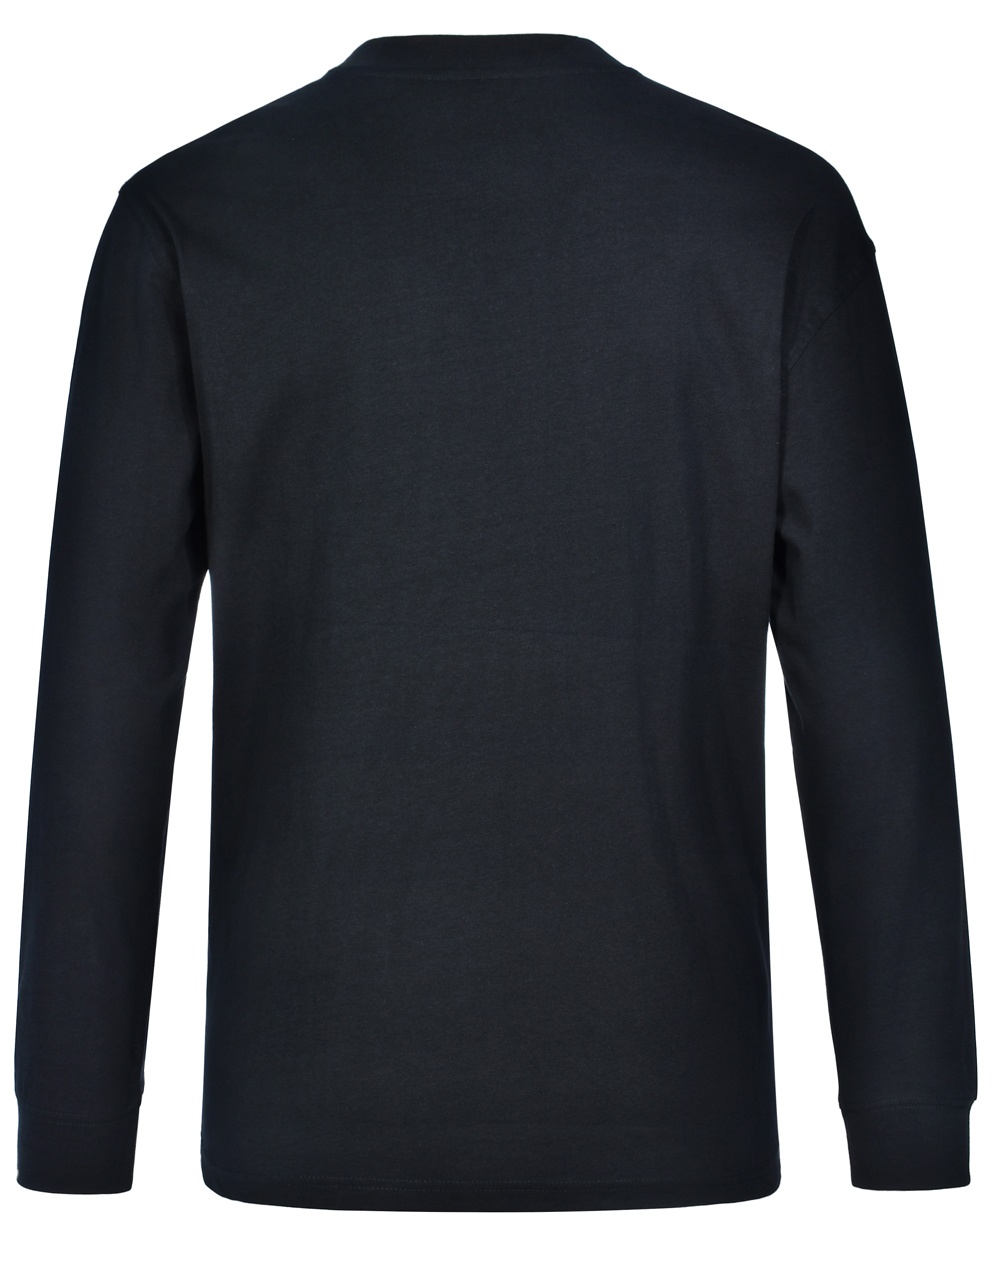 Custom Made (Black) Men's London Long Sleeve Crew Neck T-Shirts Cotton Online Australia